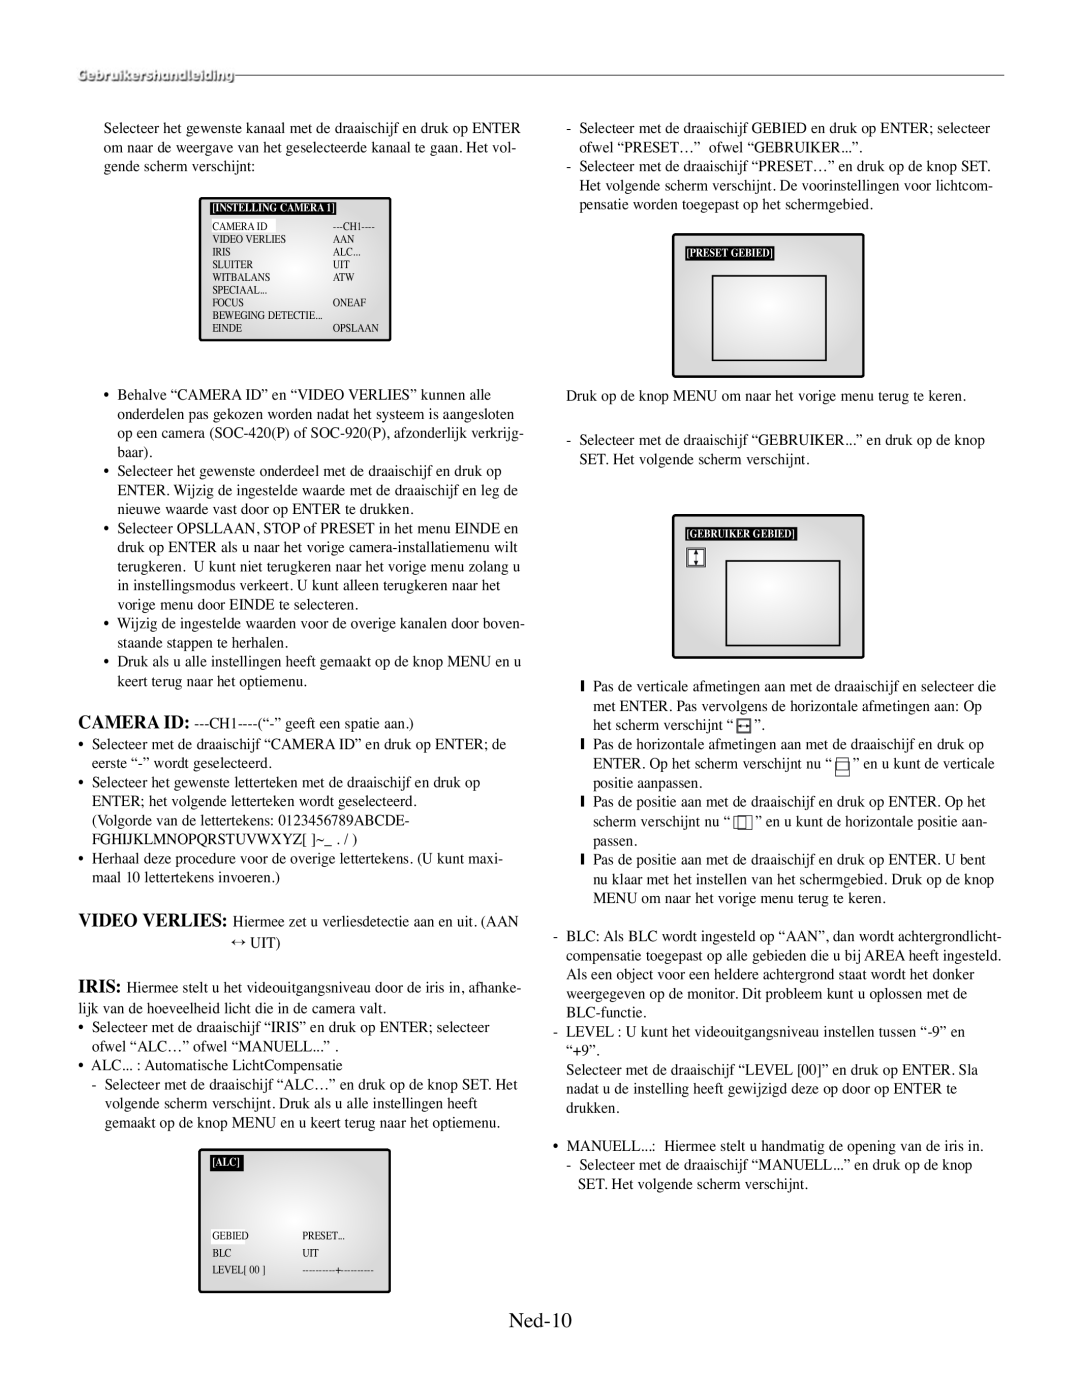 Samsung SMO-210TRP, SMO-210MP/UMG manual Ned-10 